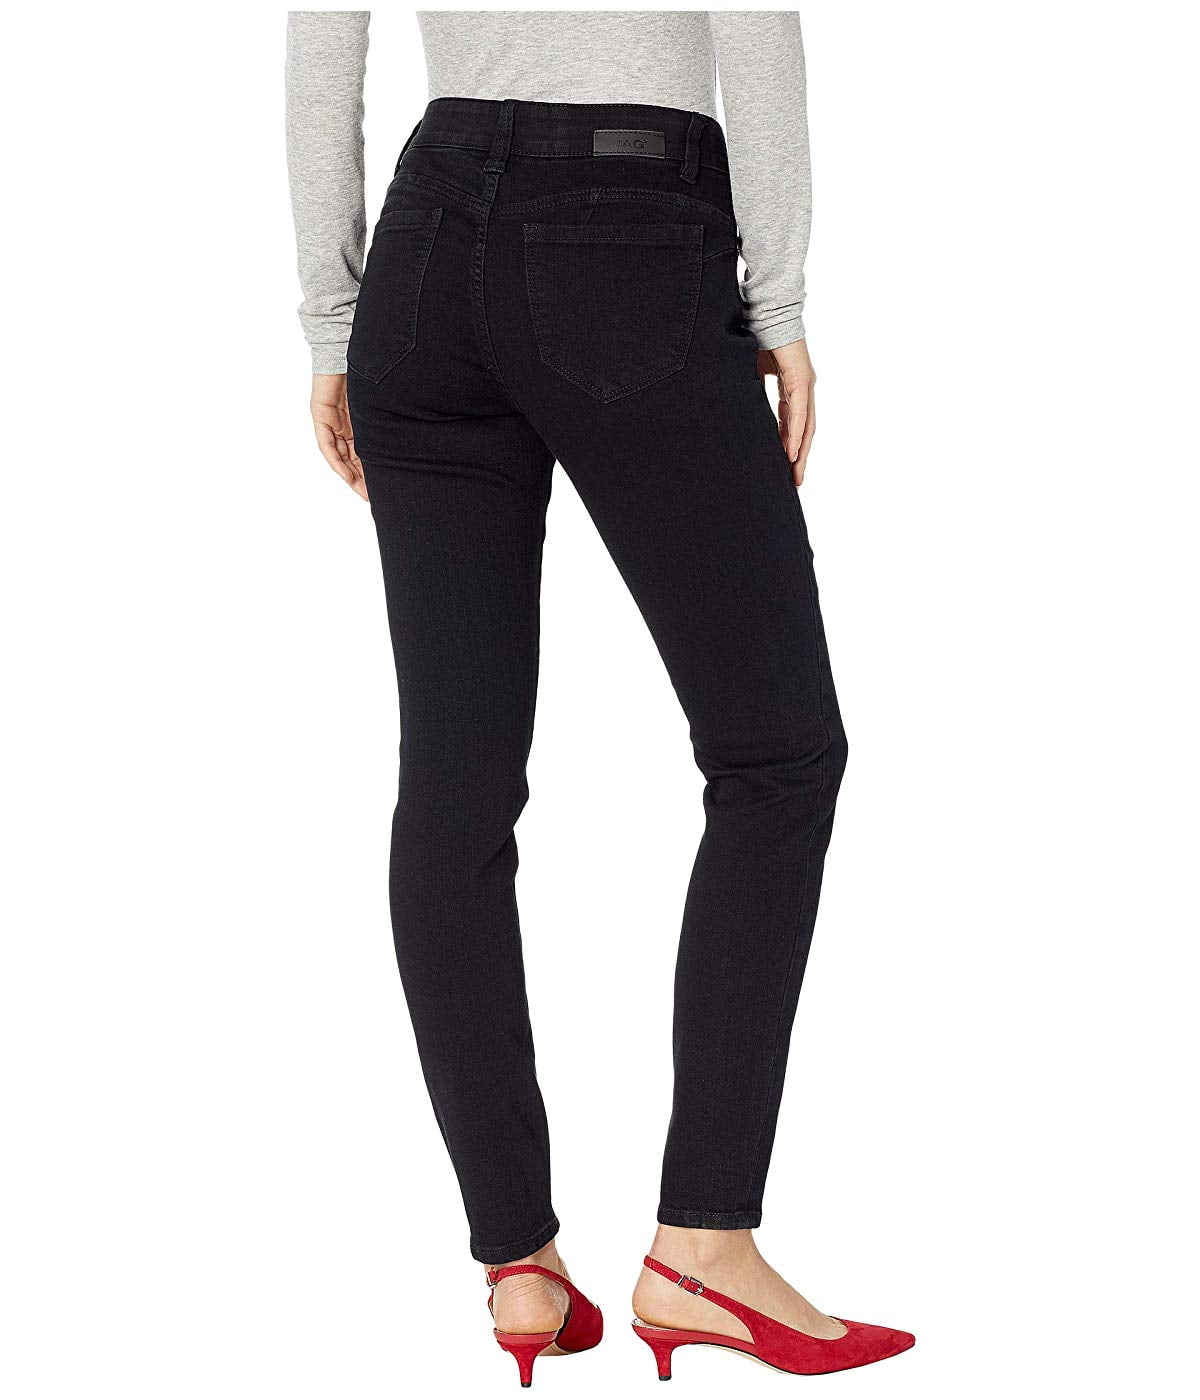 JAG Jeans - Jag Jeans Coco Skinny Jeans Black Void - Walmart.com ...